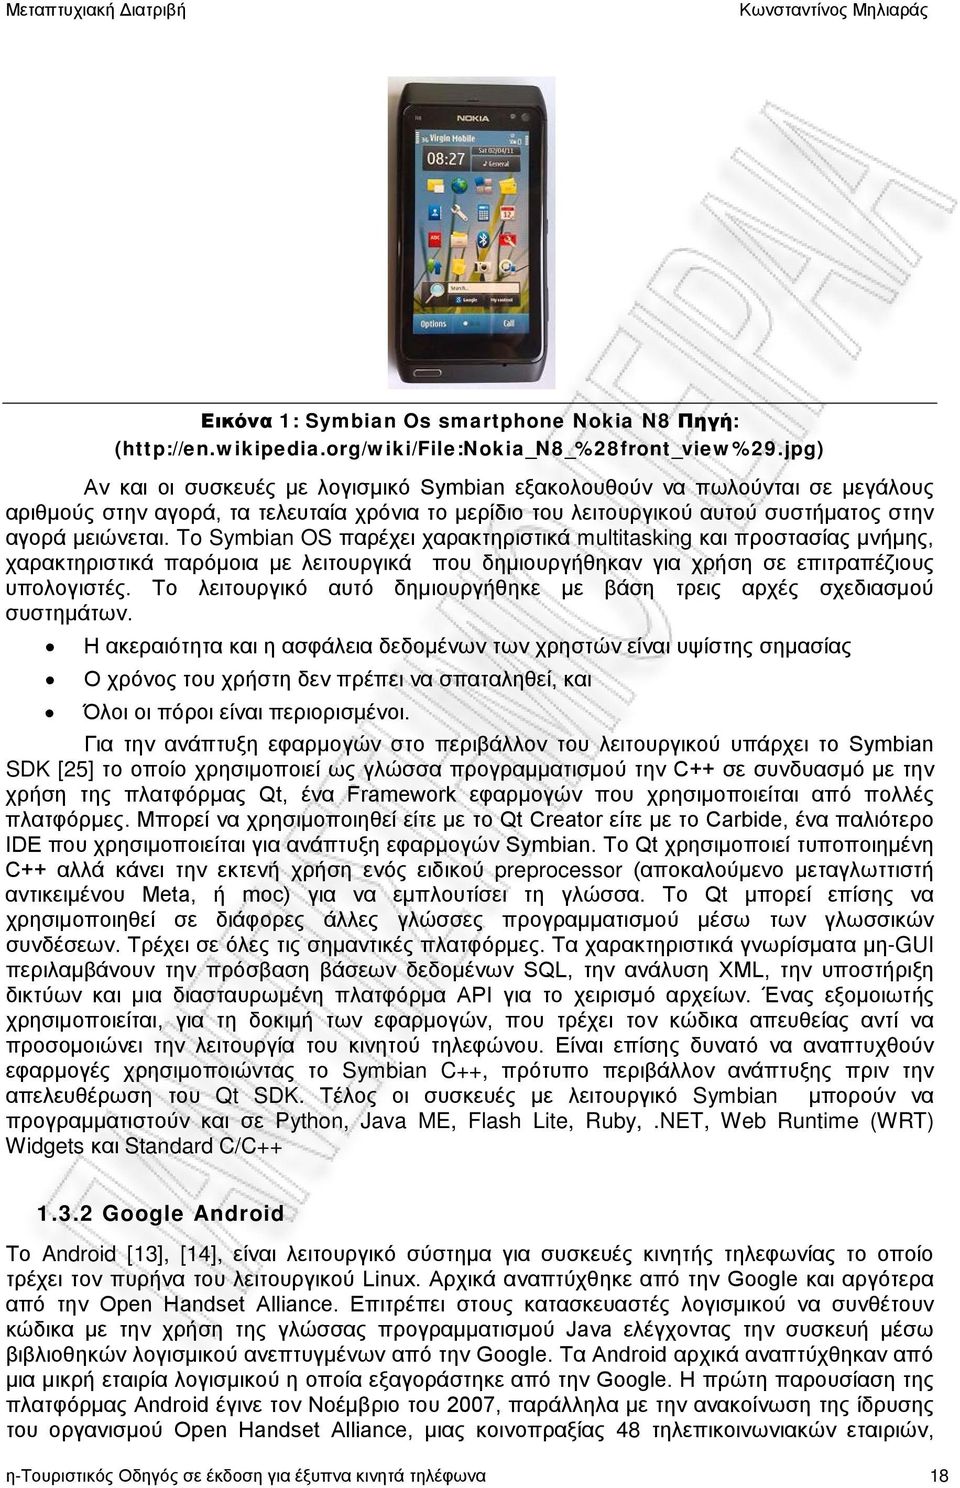 To Symbian OS παρέχει χαρακτηριστικά multitasking και προστασίας μνήμης, χαρακτηριστικά παρόμοια με λειτουργικά που δημιουργήθηκαν για χρήση σε επιτραπέζιους υπολογιστές.